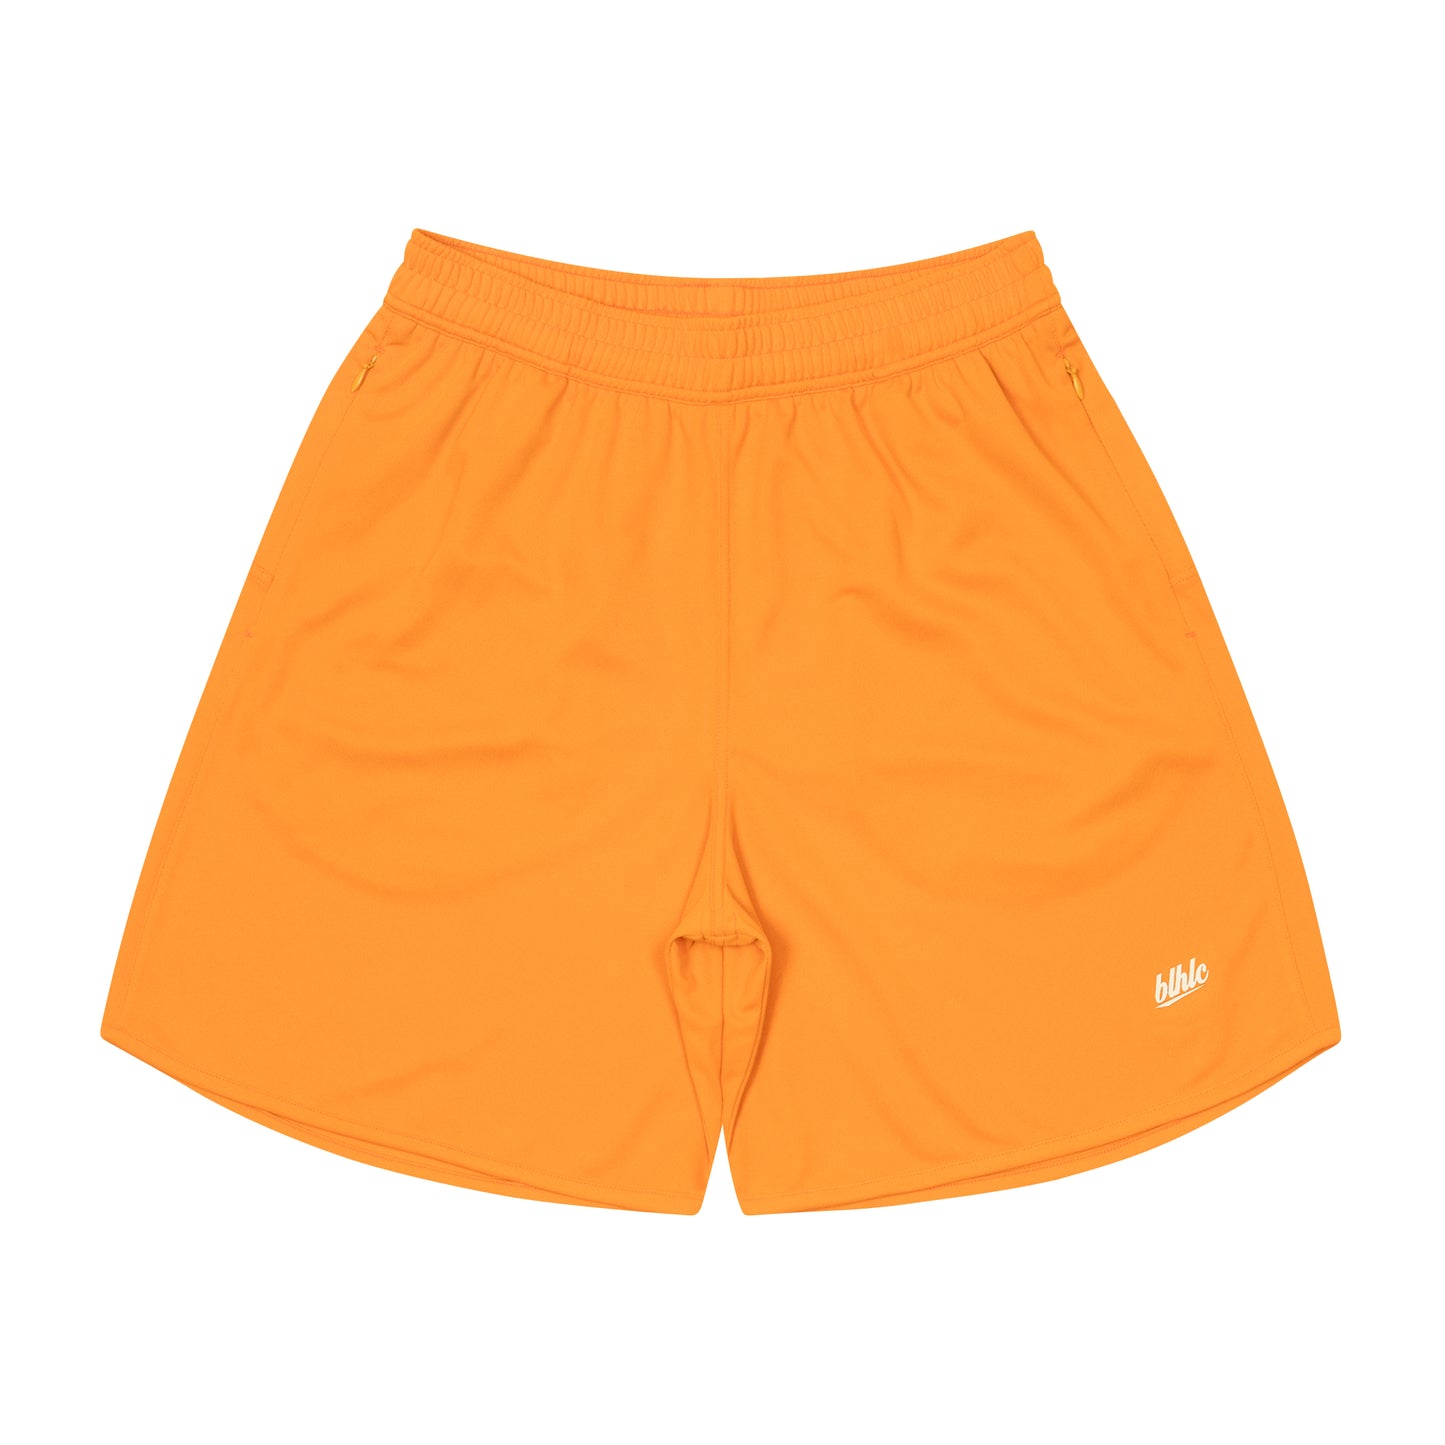 Basic Zip Shorts (tangerine orange/off white)